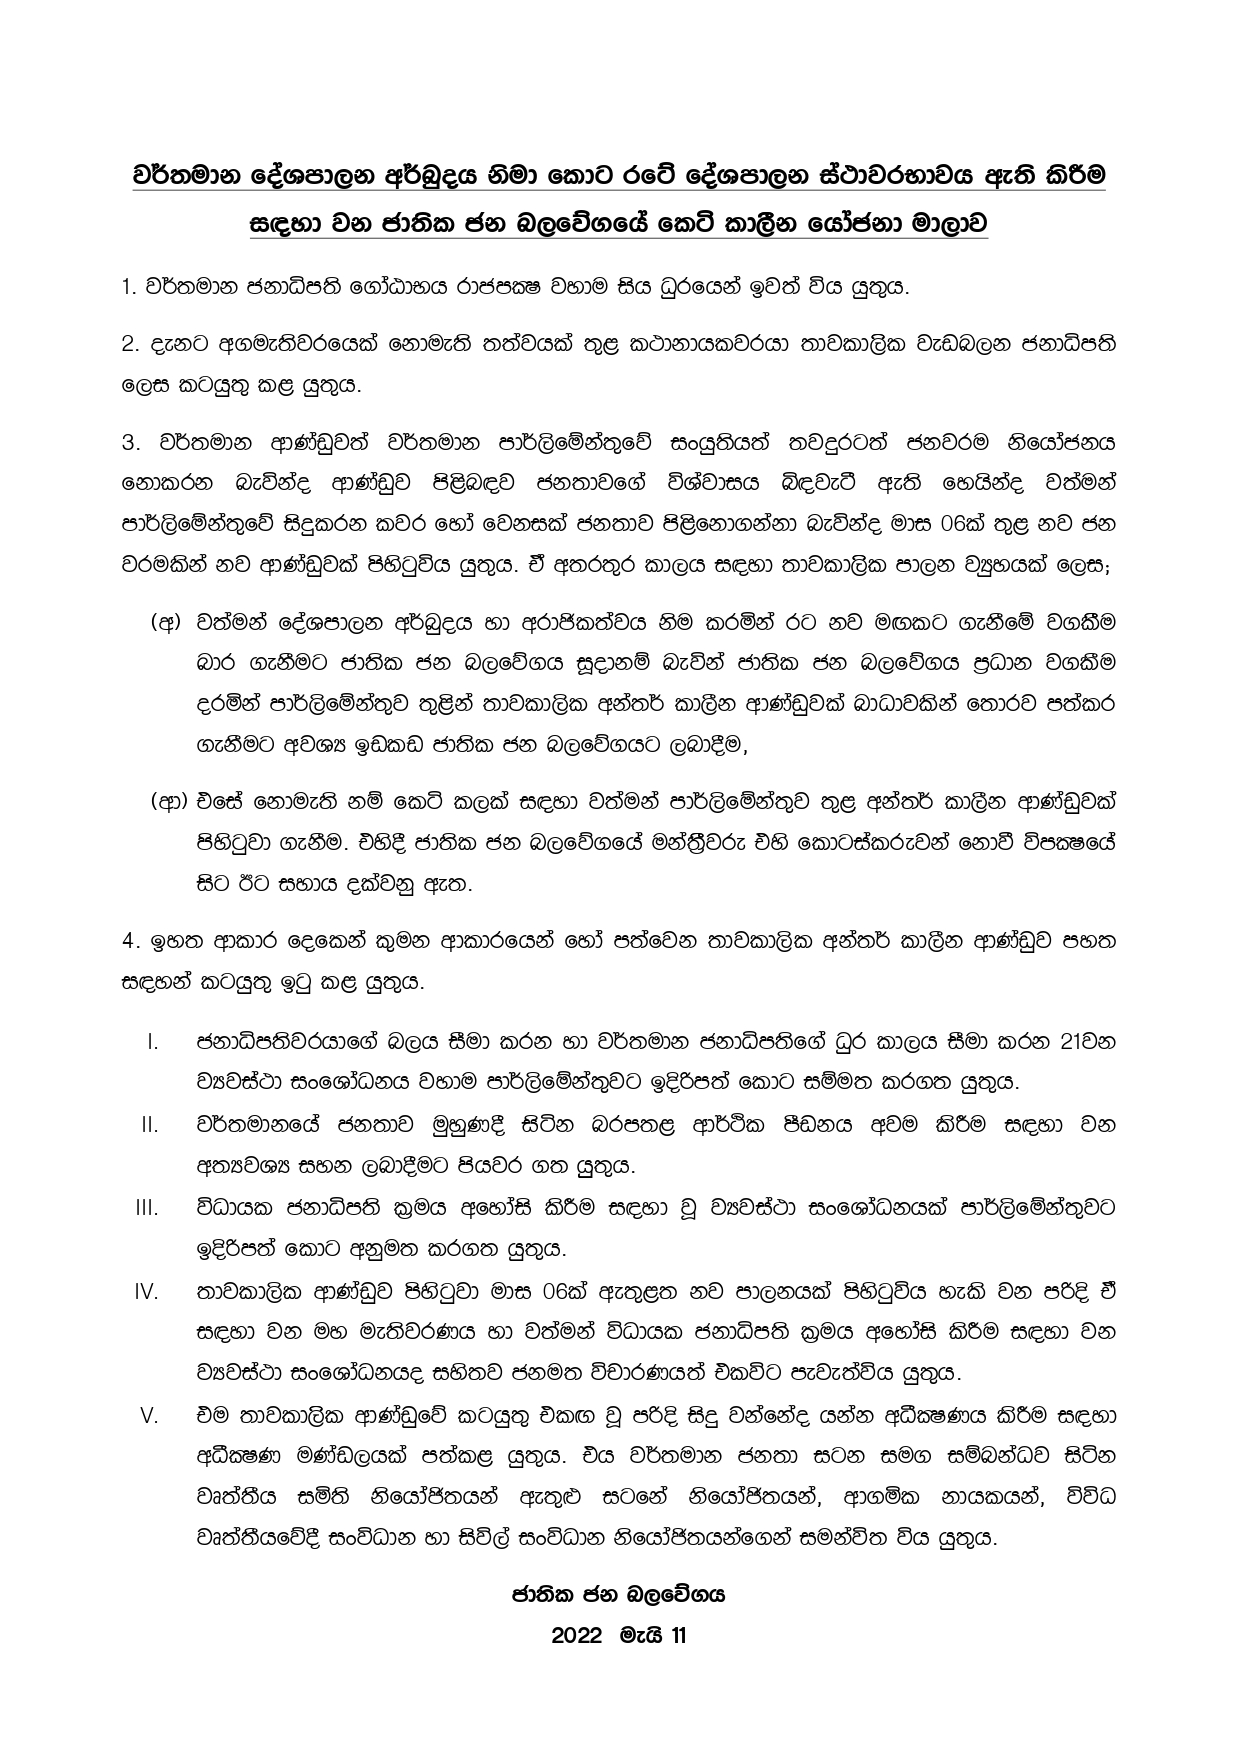 NPP Proposals 2022.05.11 page 0001